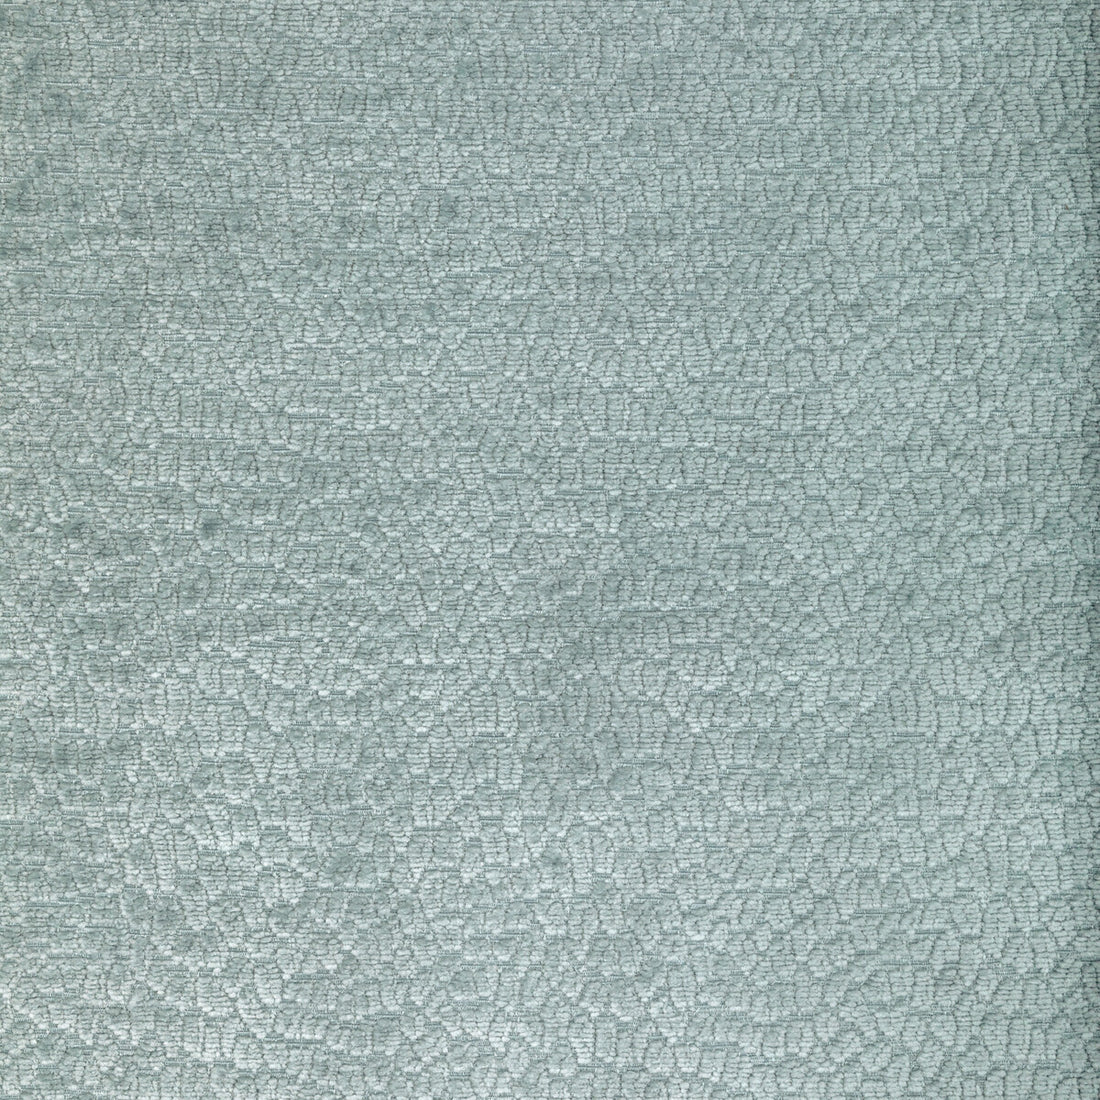 Kravet Smart fabric in 36606-15 color - pattern 36606.15.0 - by Kravet Smart in the Performance Kravetarmor collection